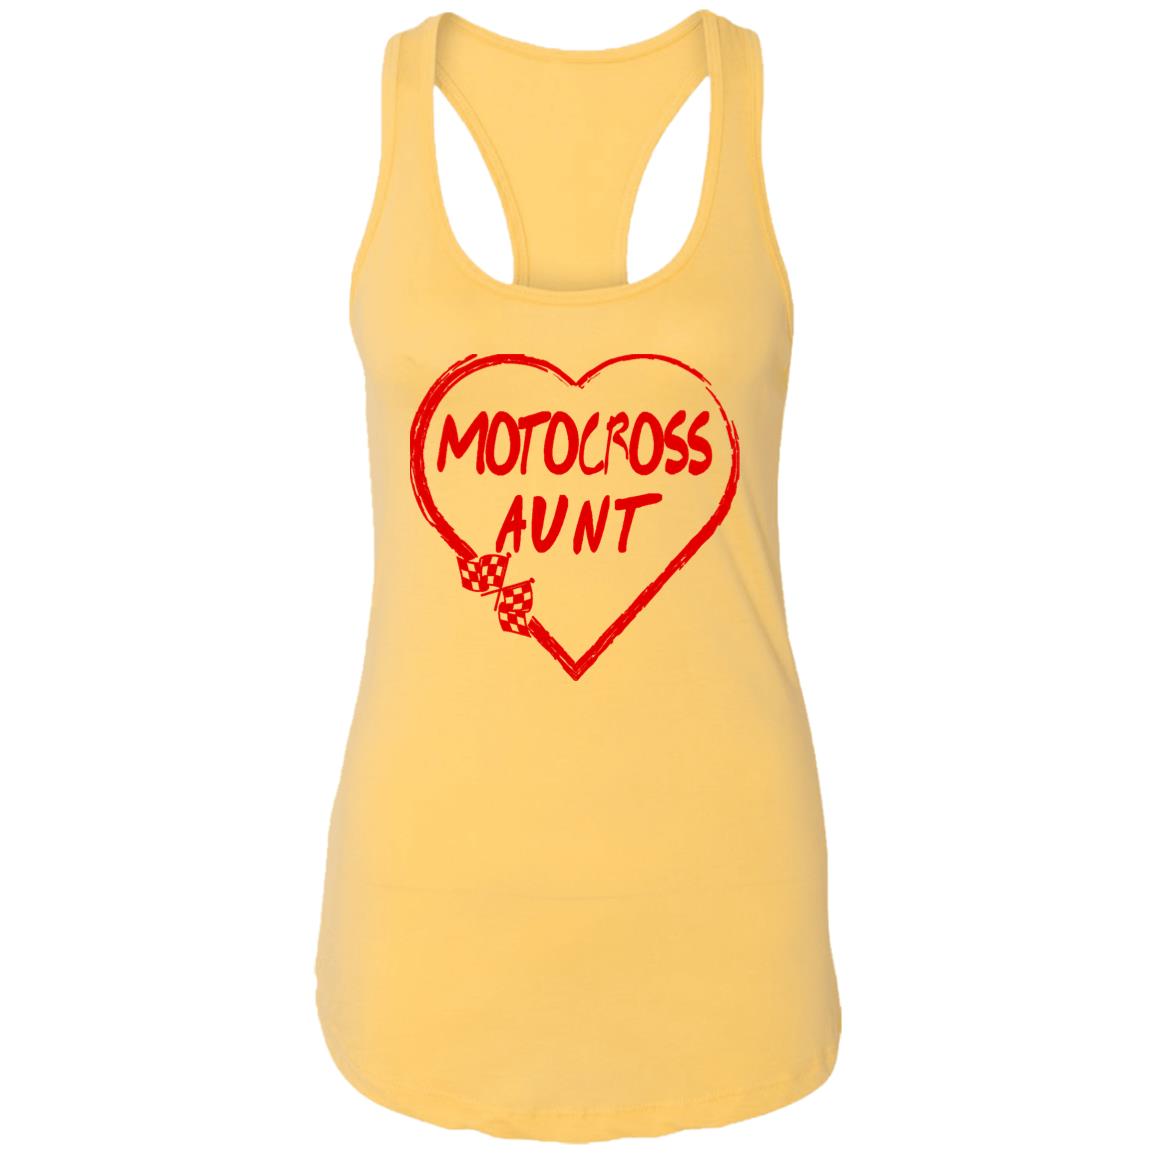 Motocross Aunt Heart Ladies Ideal Racerback Tank